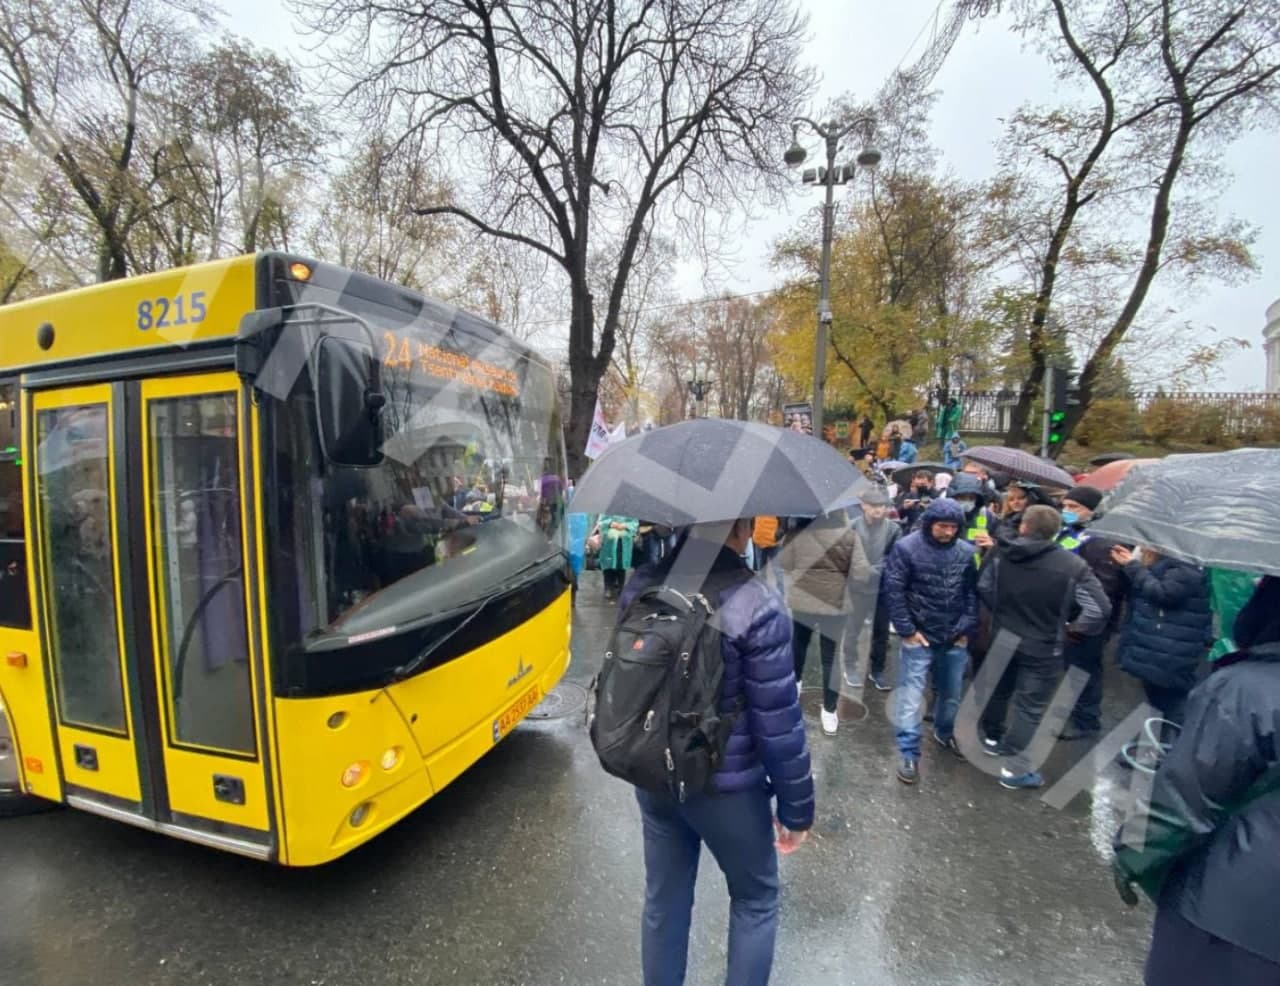 В Киеве 3 ноября проходит акция протеста антипрививочников от коронавируса